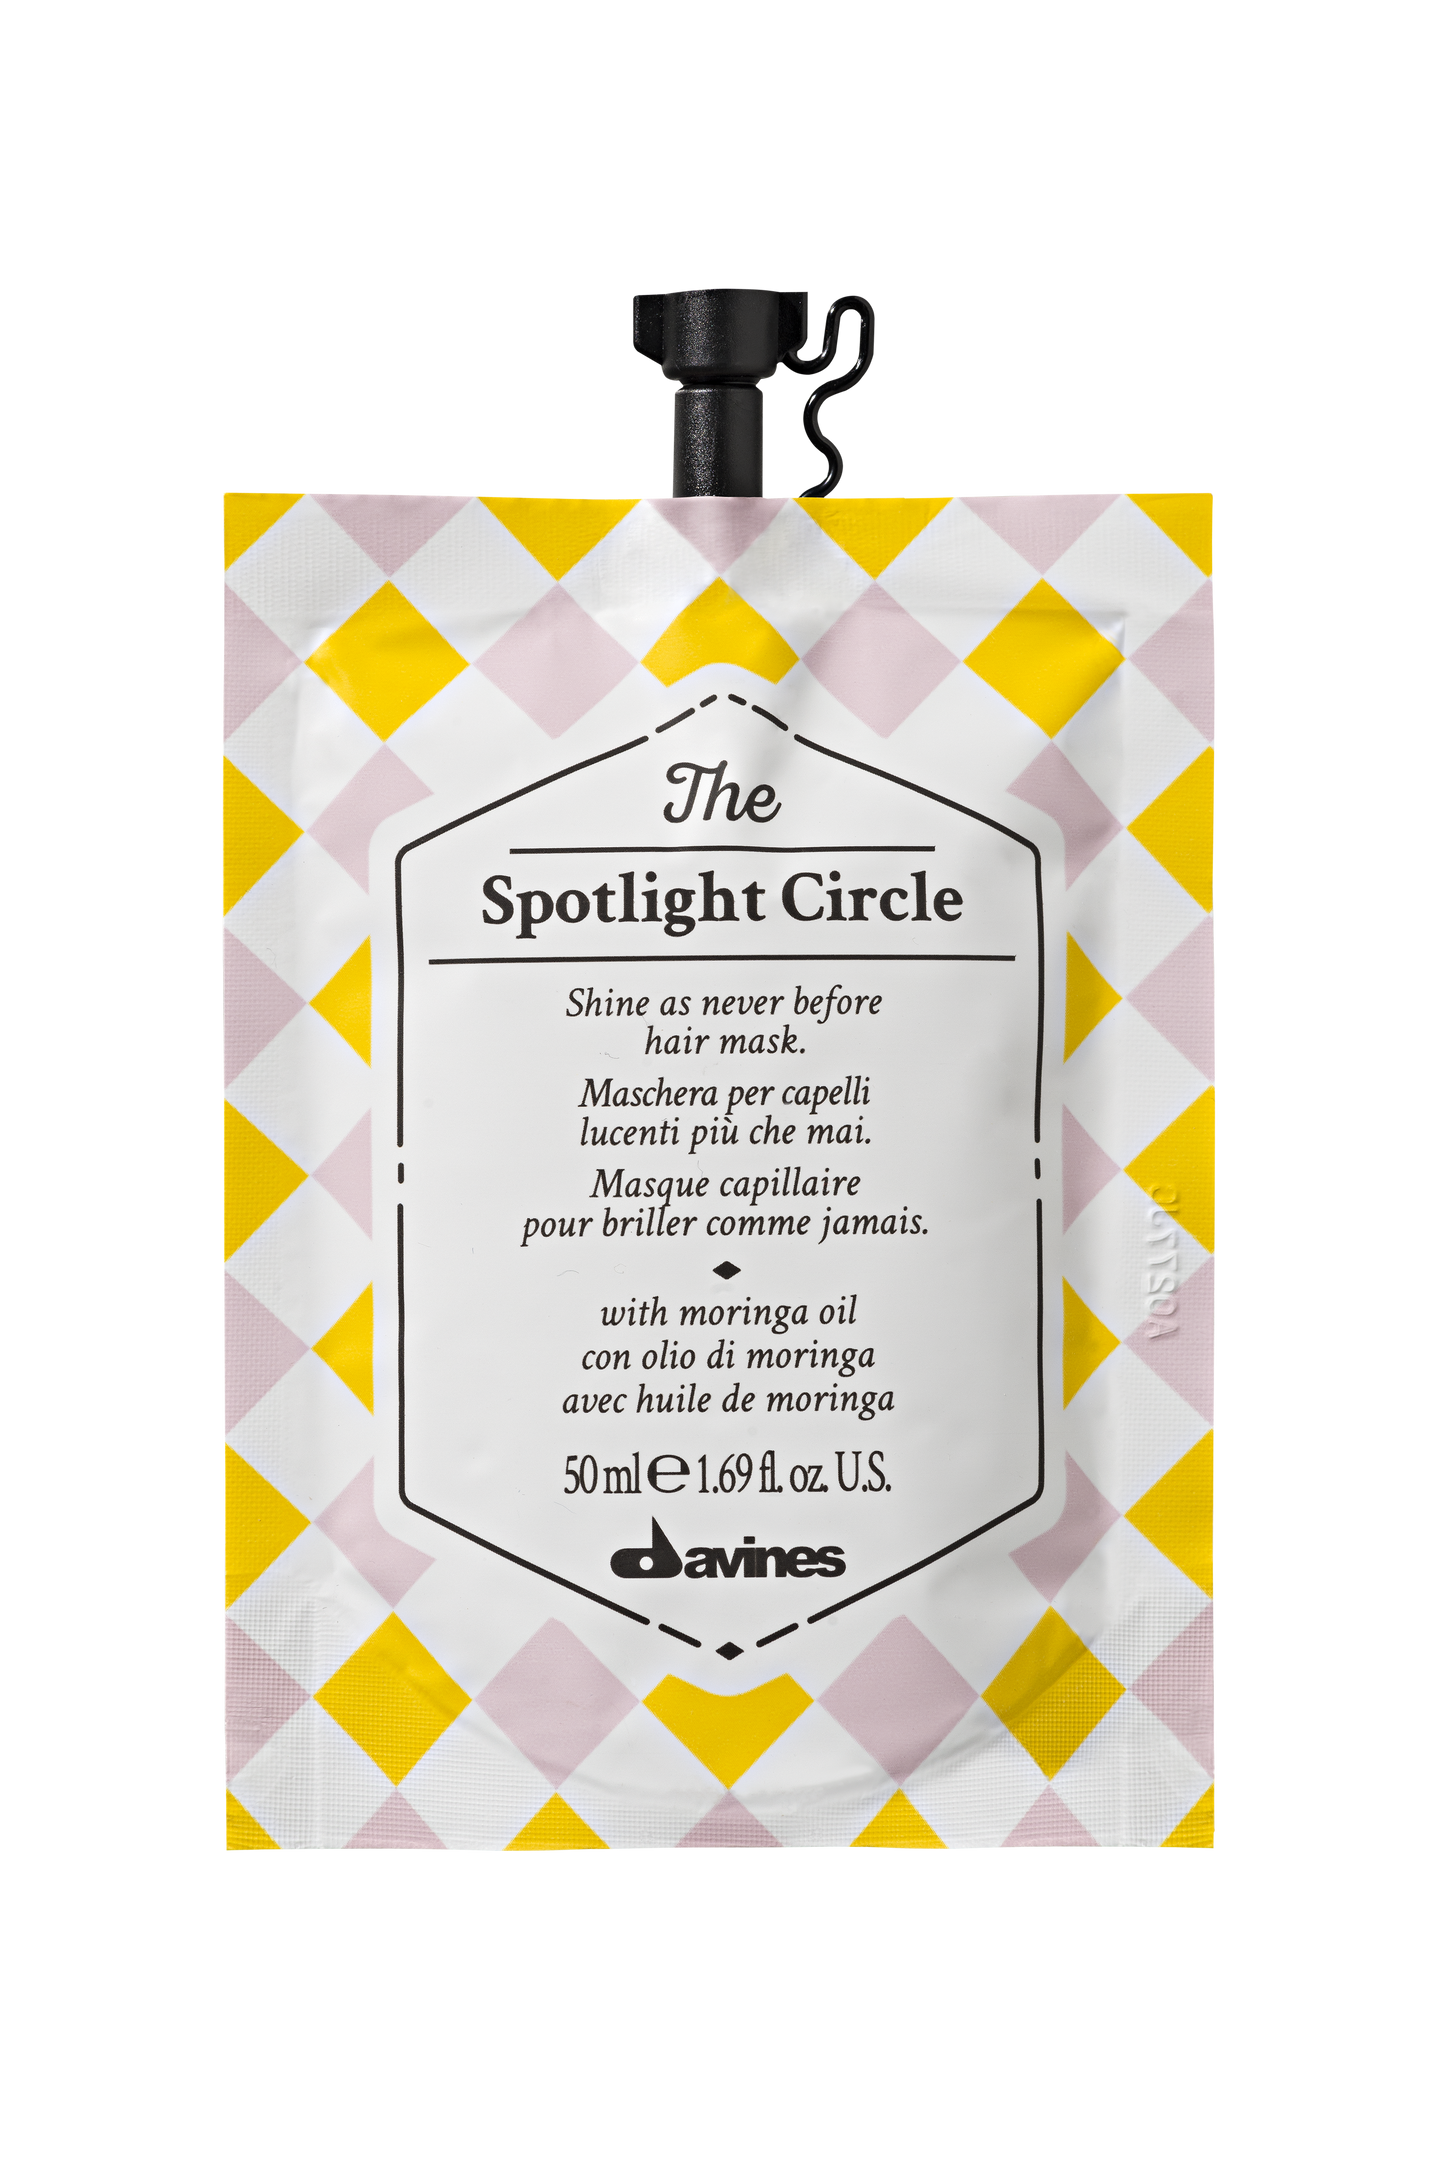 The Circle Chronicles - The Spotlight Circle